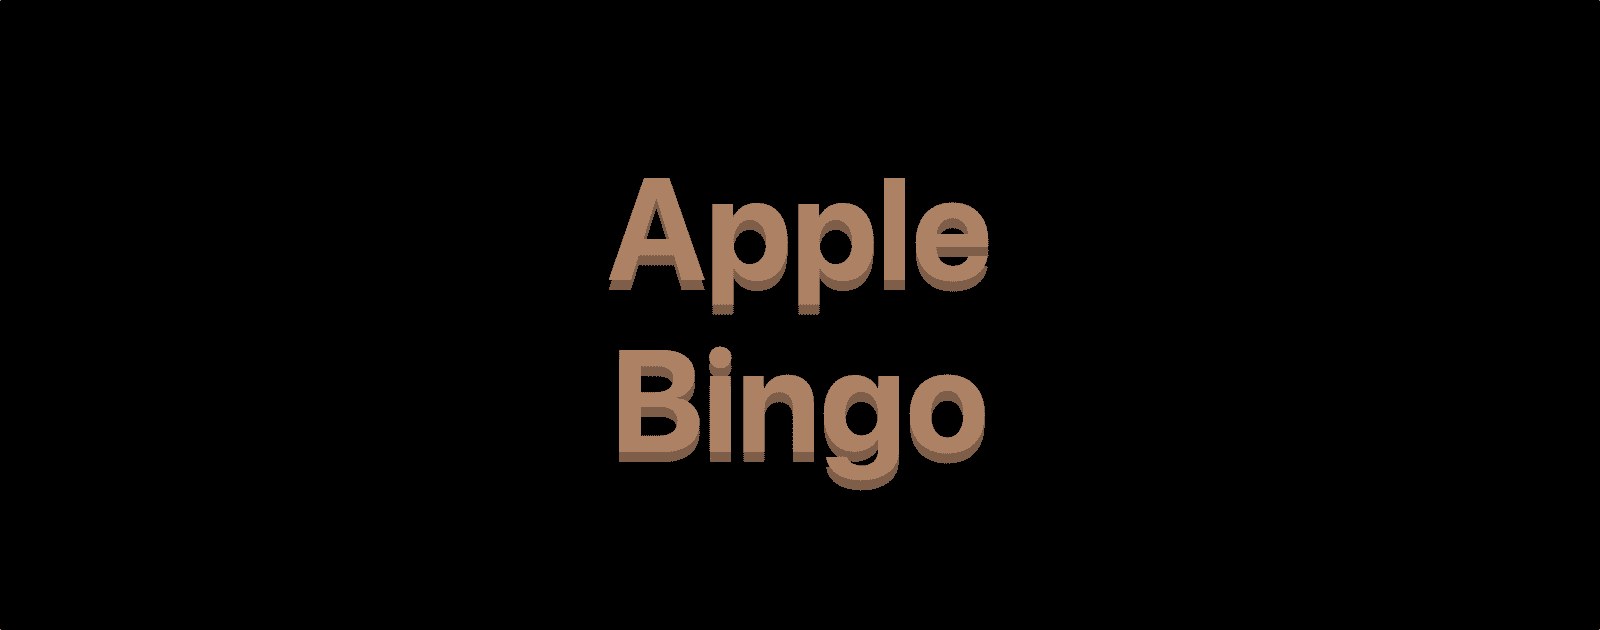 The 2018 Apple Bingo Edition Is Here